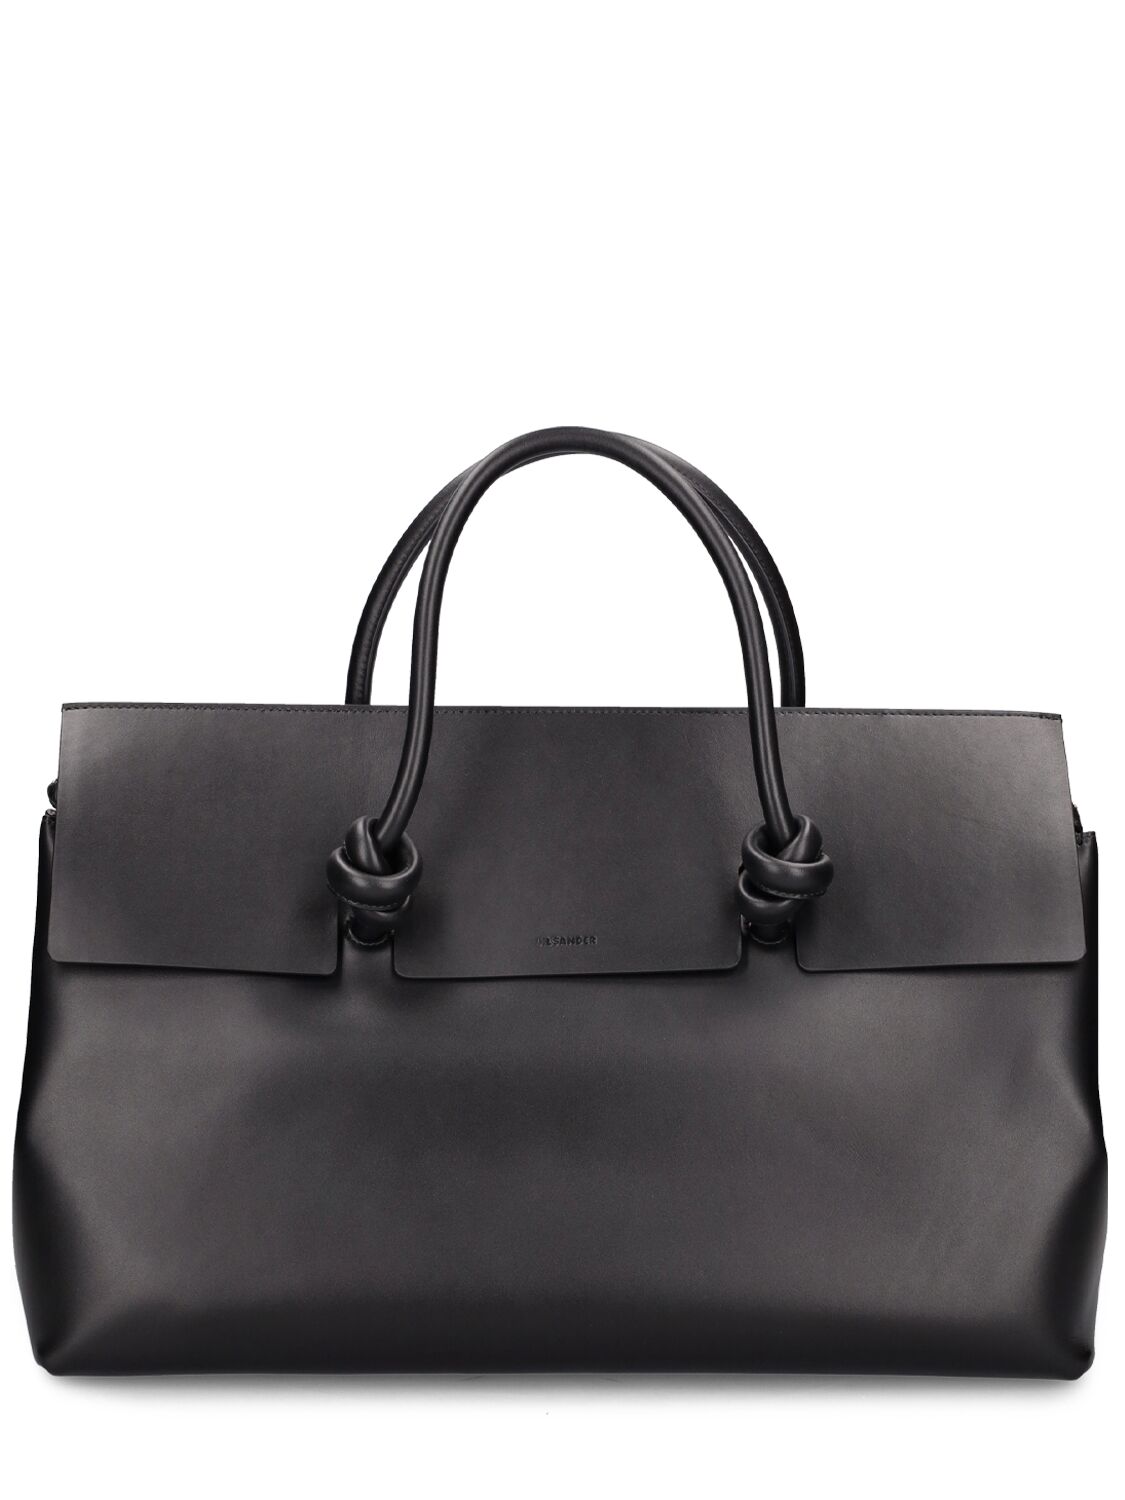 Jil Sander Knot Leather Tote Bag In Black